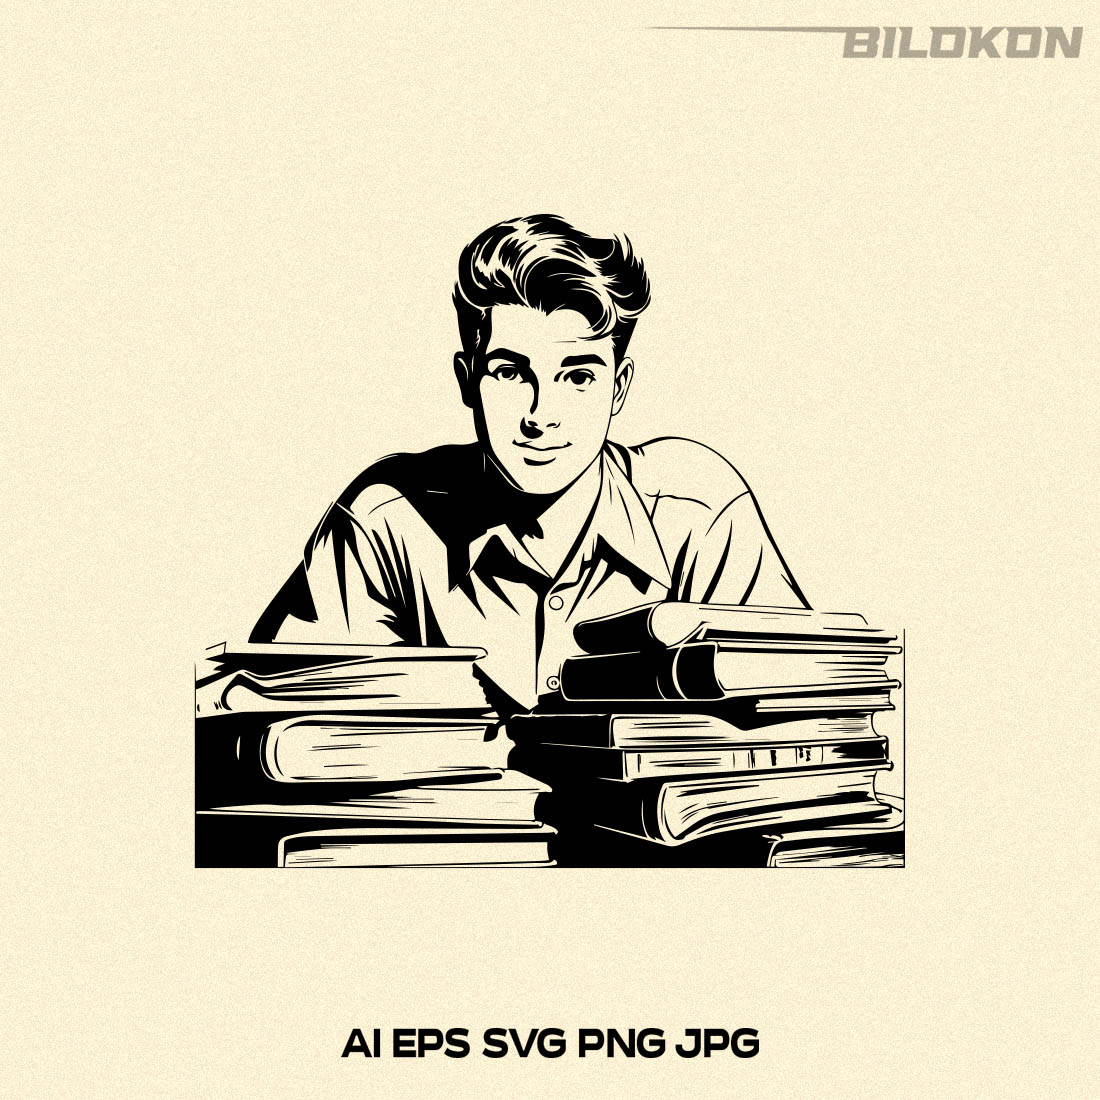 Vintage boy reads books, boy studies at school, SVG Vector preview image.